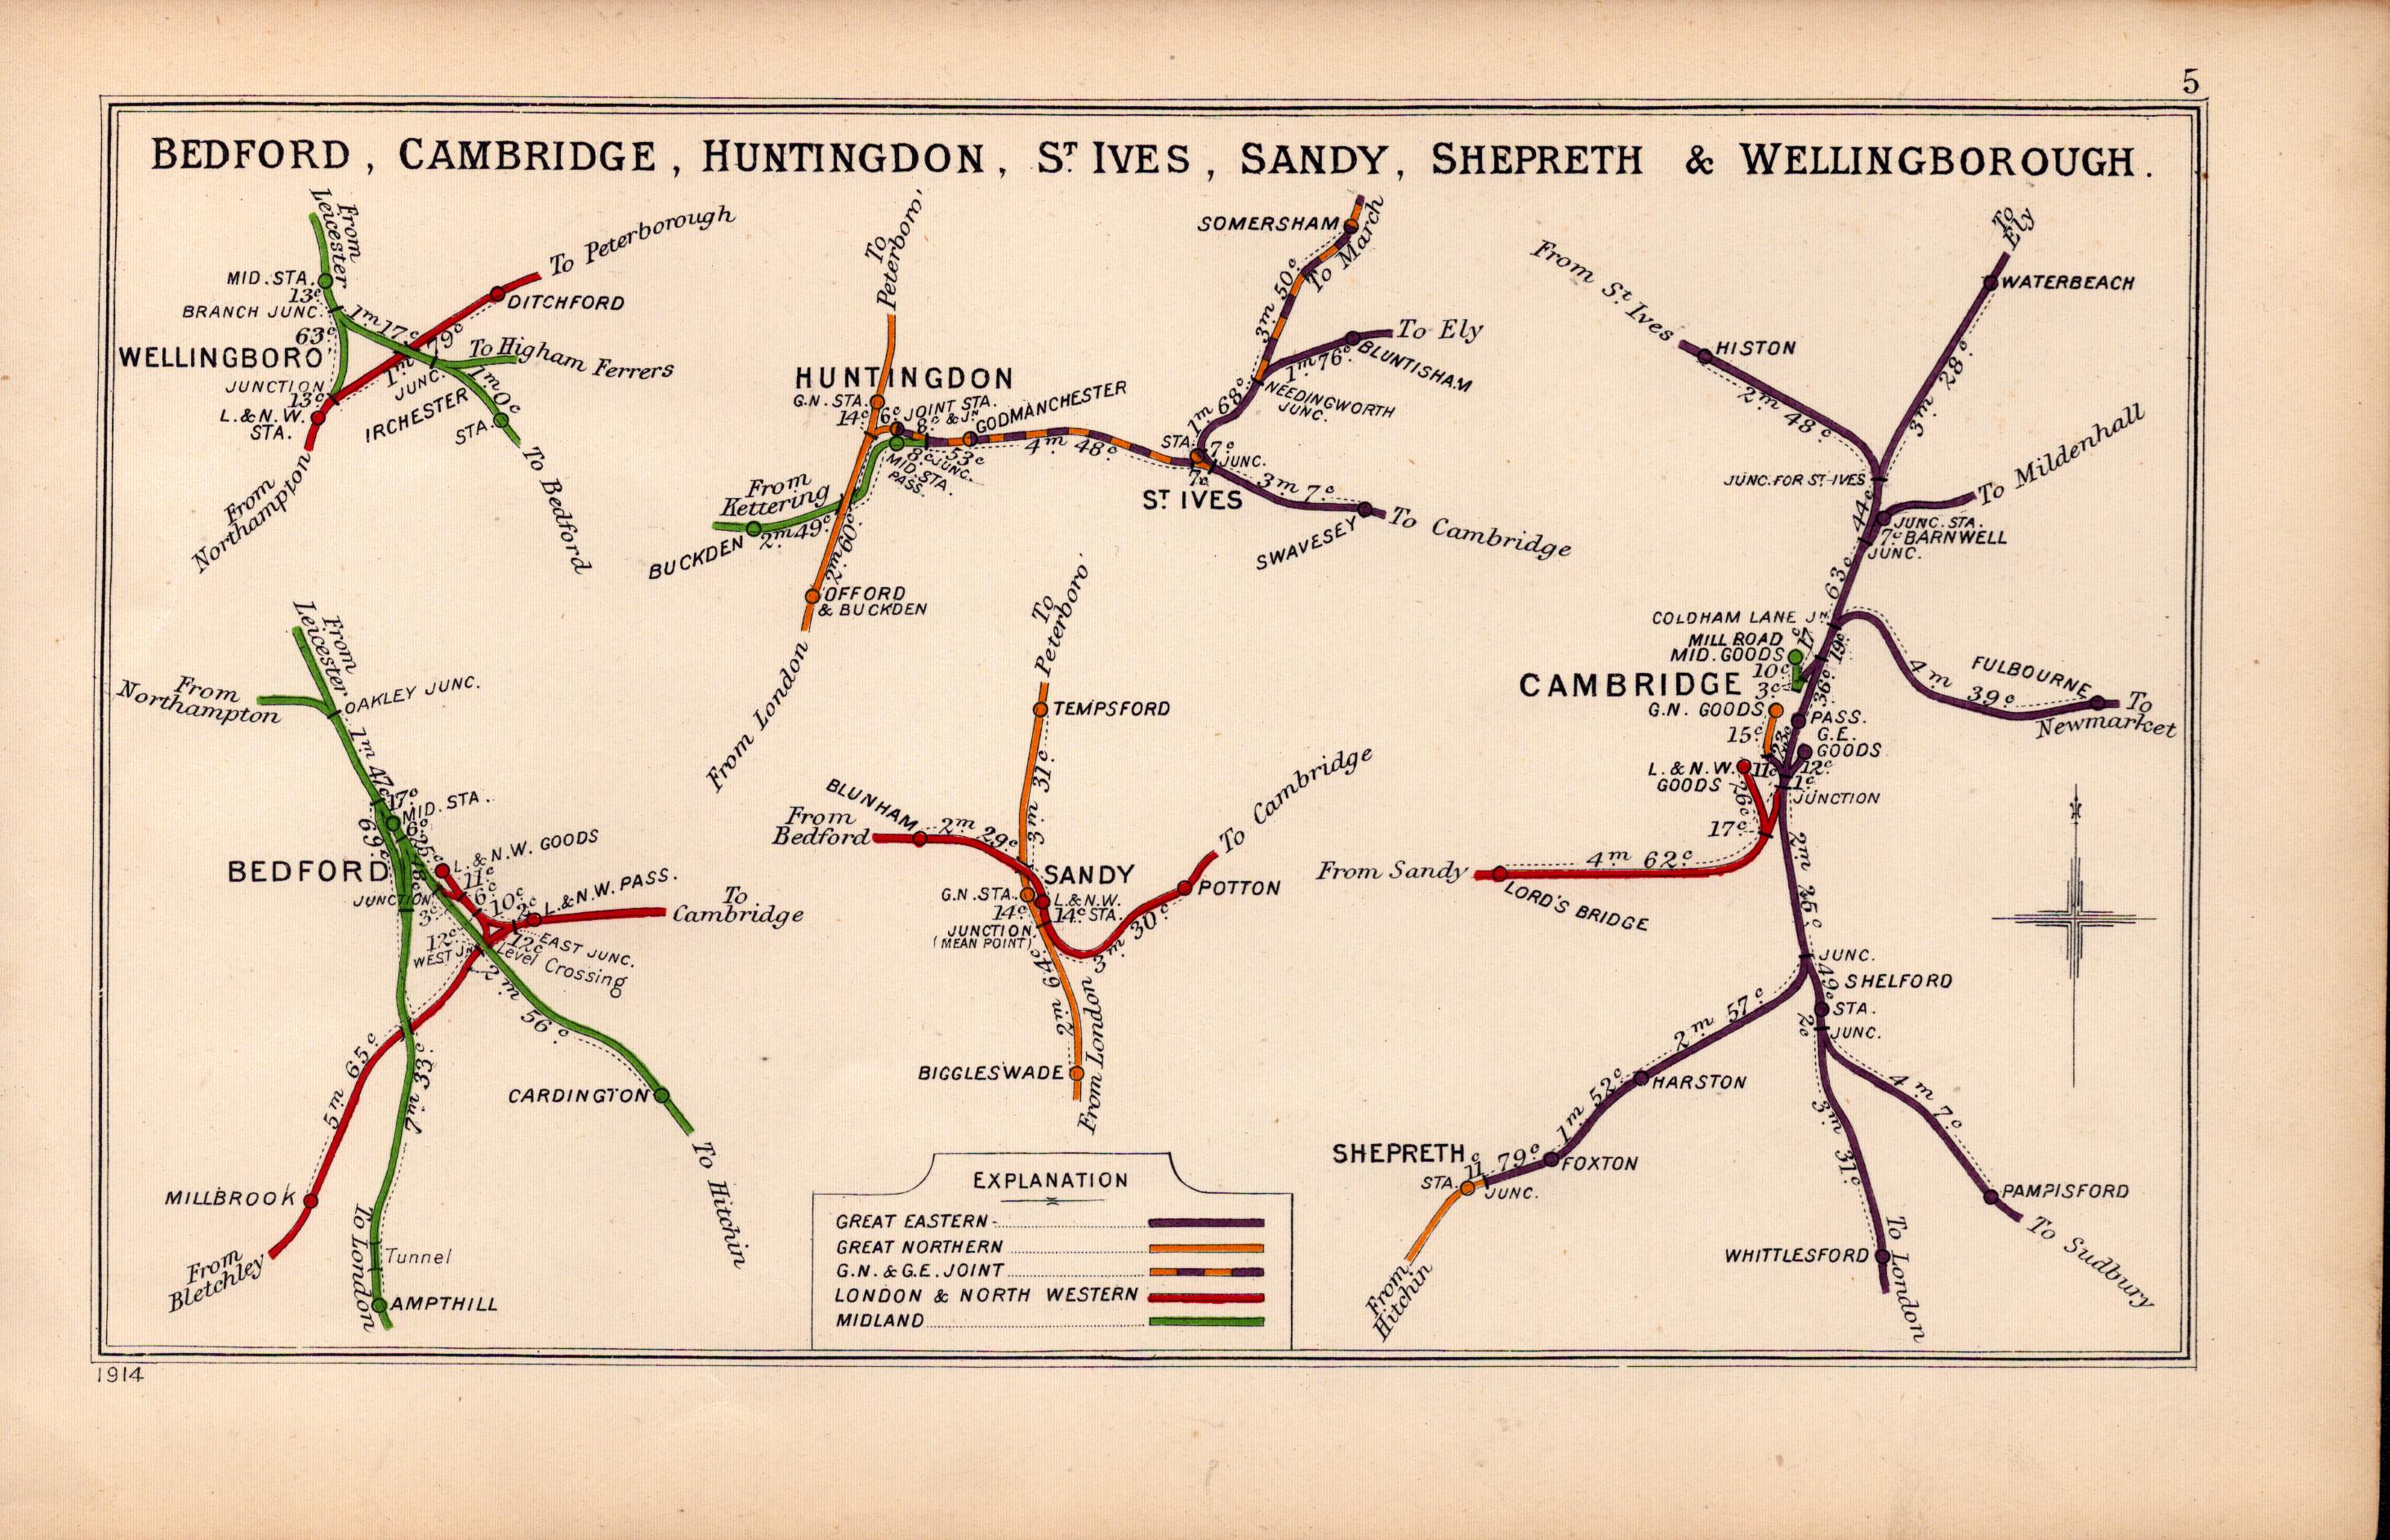 Bedford, Cambridge, Huntingdon, St Ives Antique Railway Junction Diagram-5.